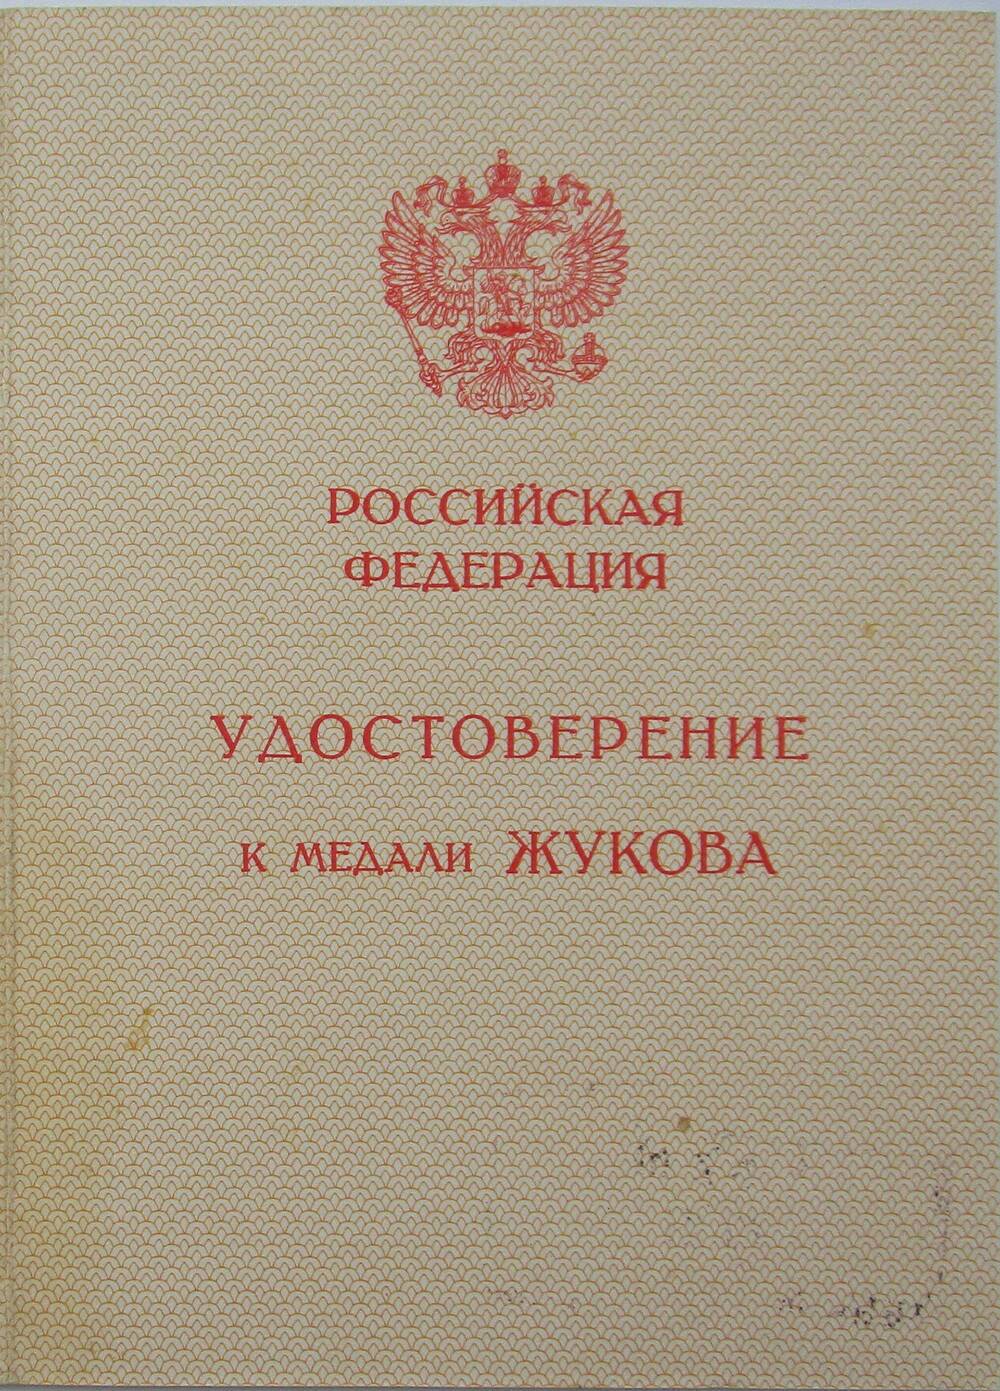 Удостоверение к медали Жукова Б № 0312578  на имя Сорокина Ф.П. 2 л.